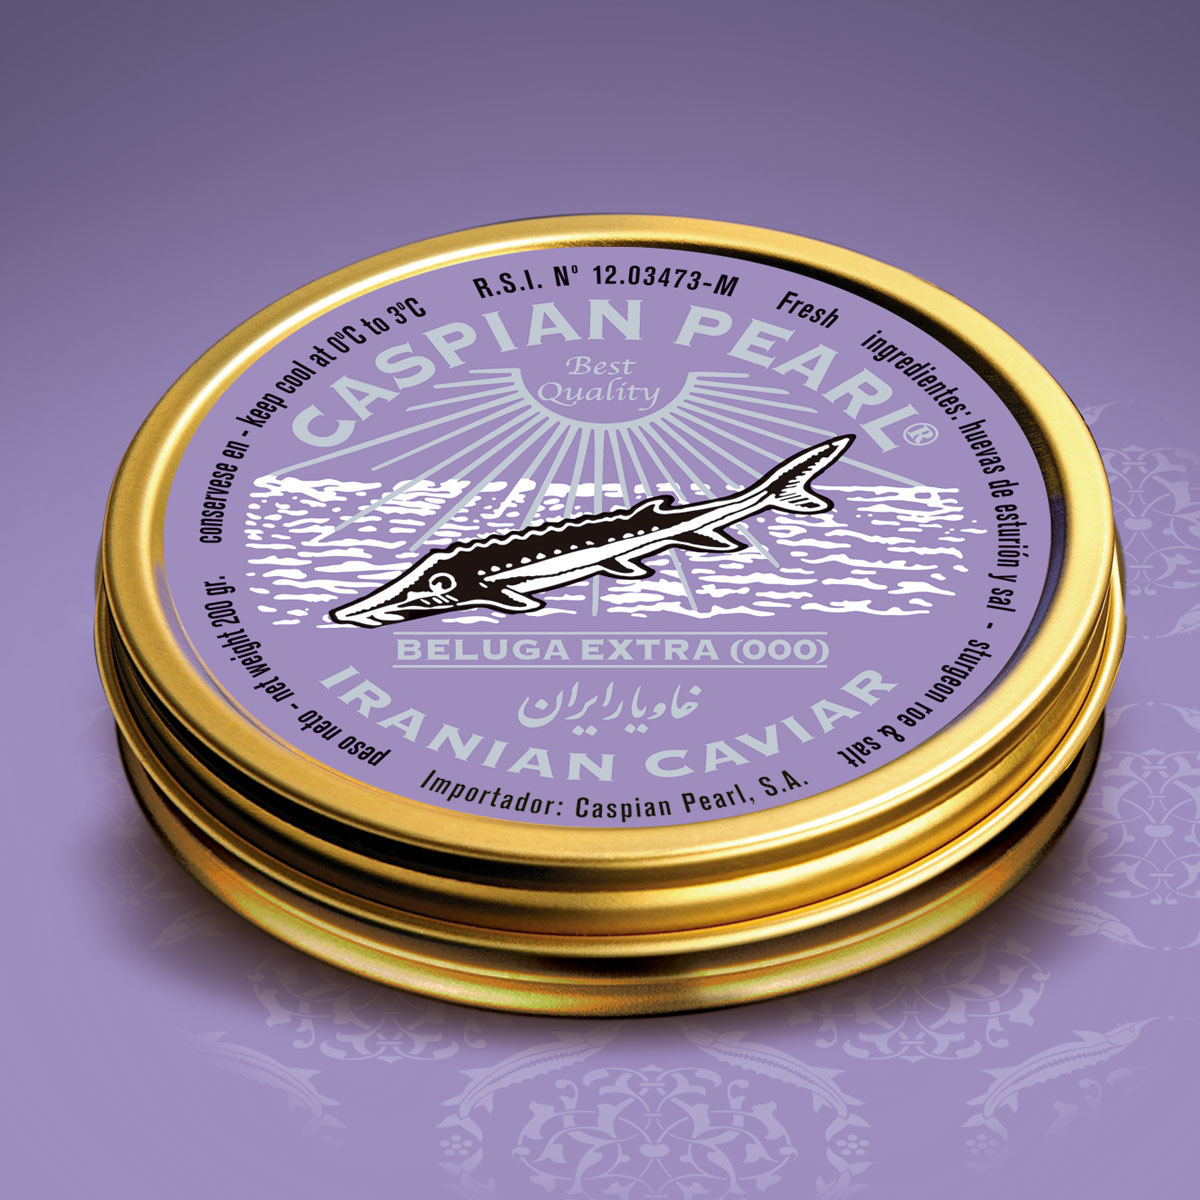 Caspian Pearl. Posts Instagram para La Marca del Caviar. Caviar Beluga Imperial Extra (000)